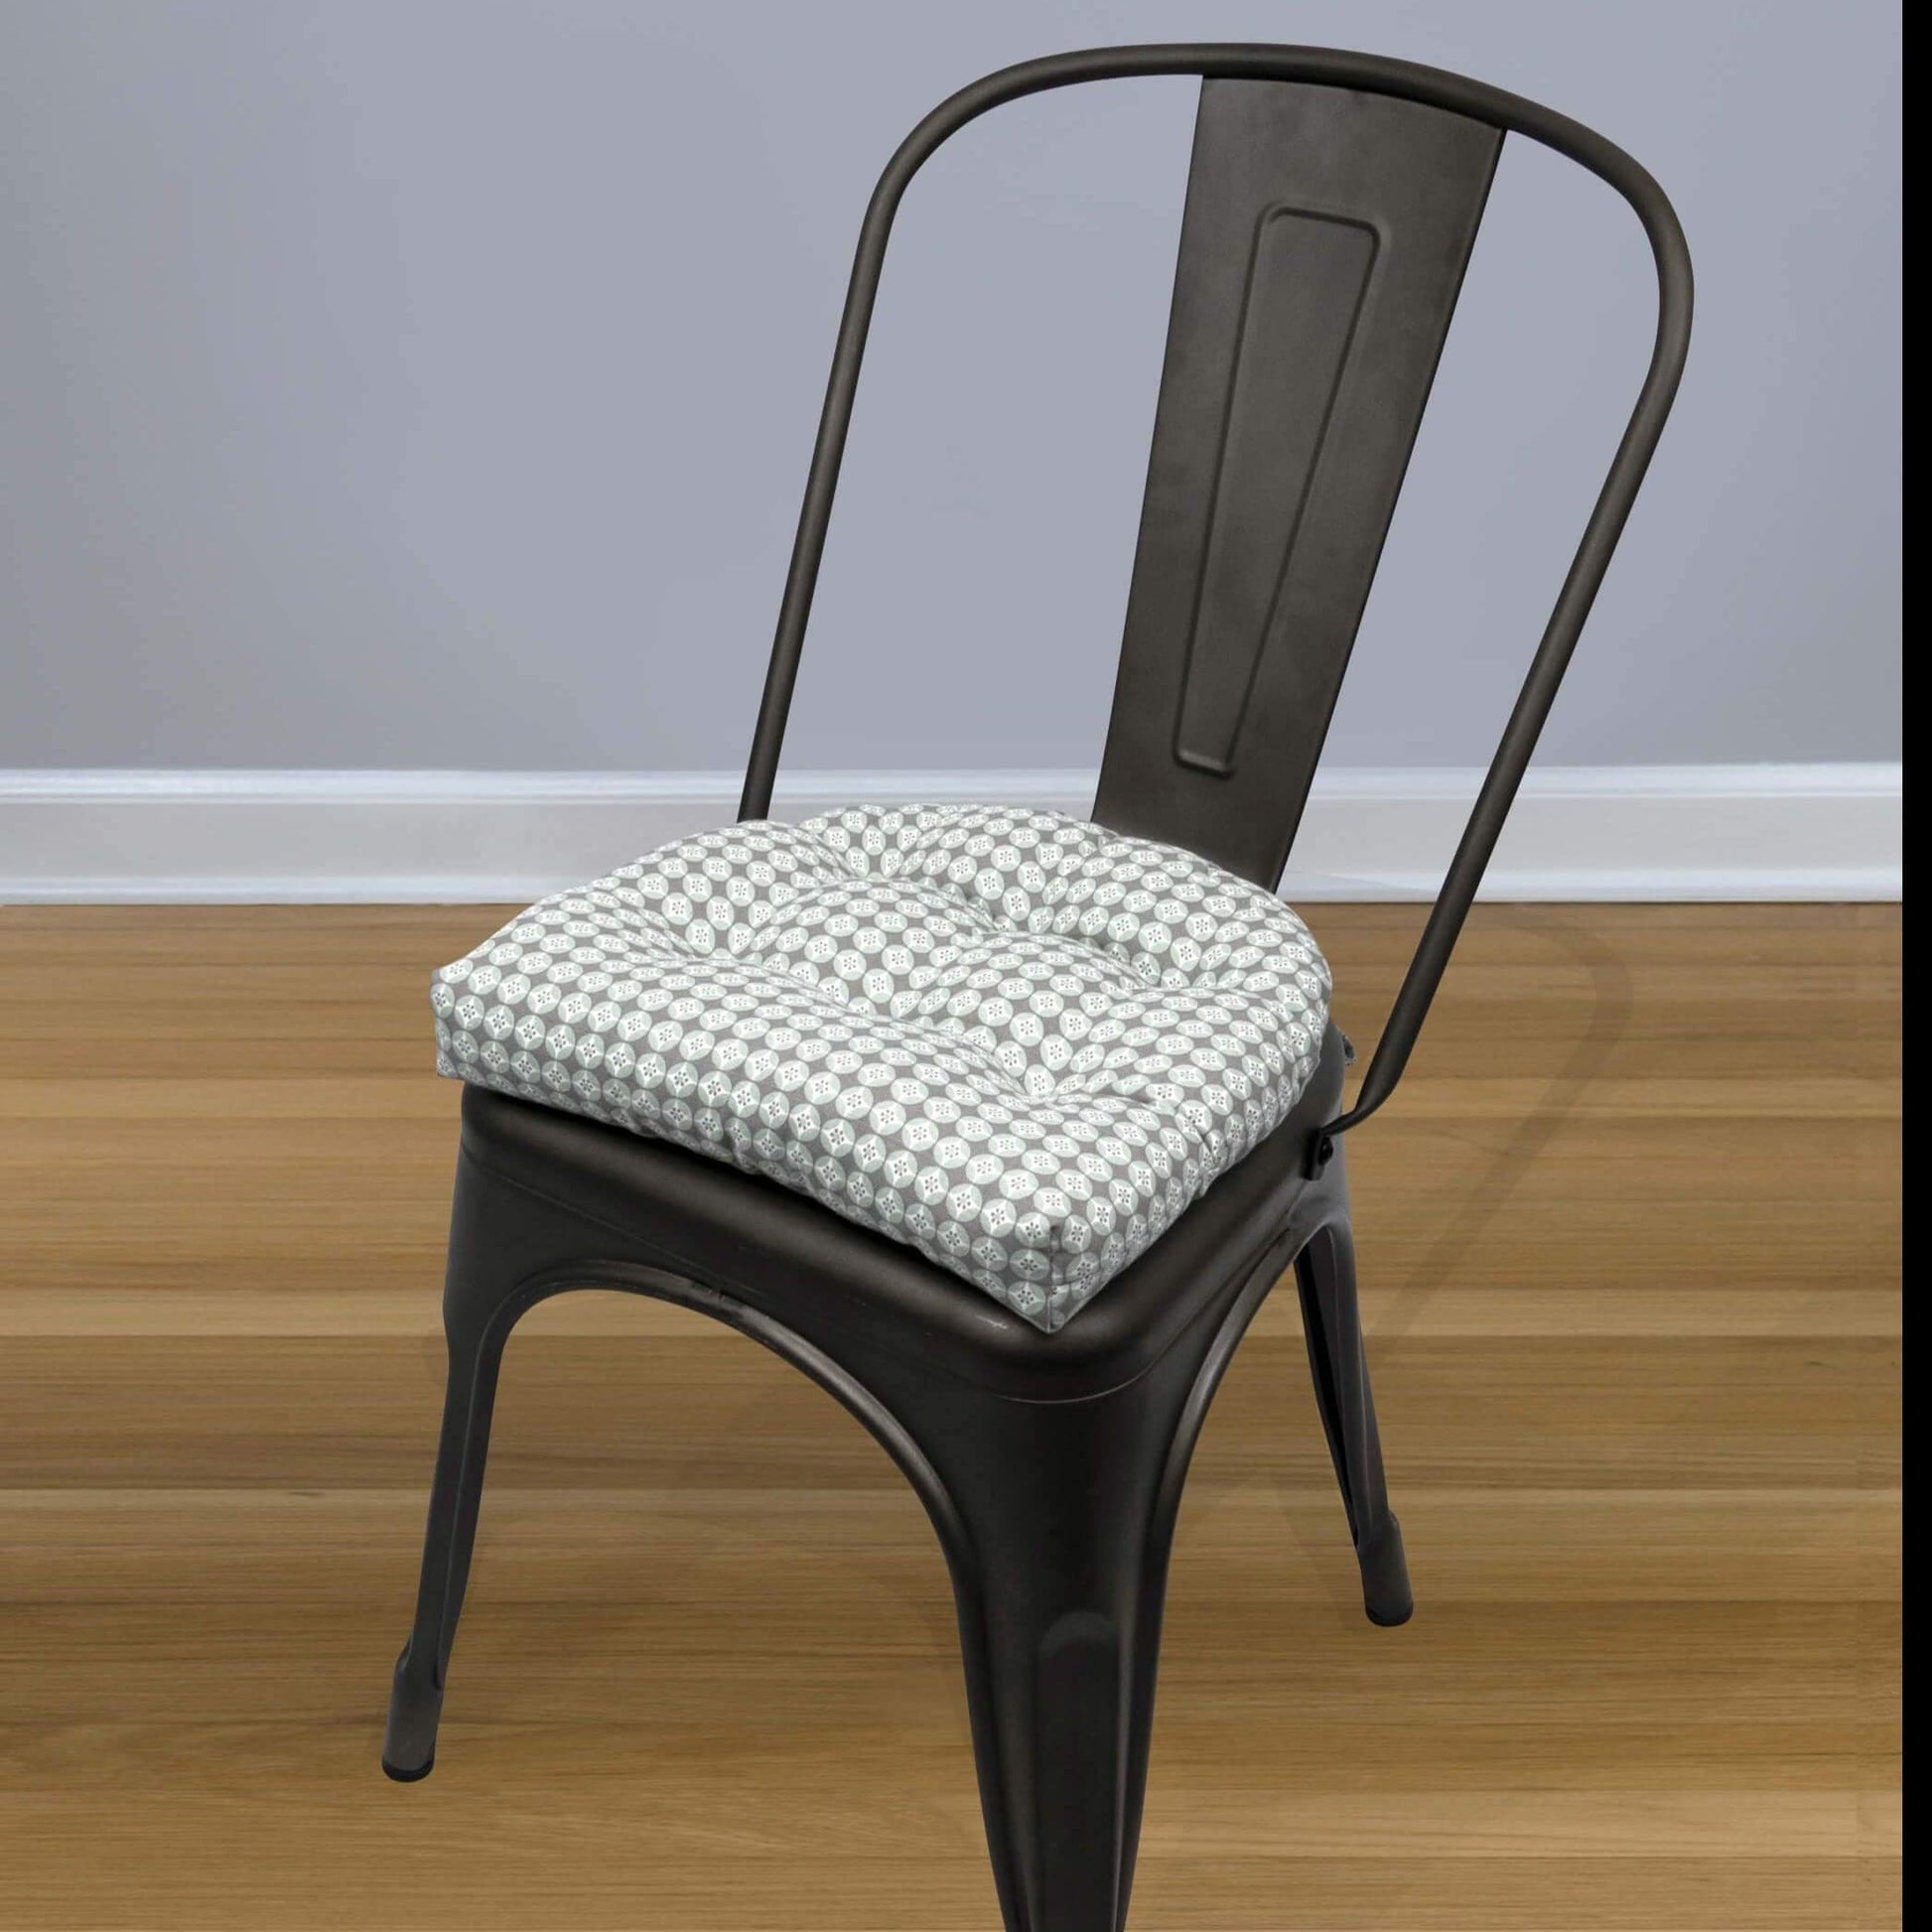 Bliss Industrial Chair Pad - Barnett Home Decor - Spa Blue & Gray